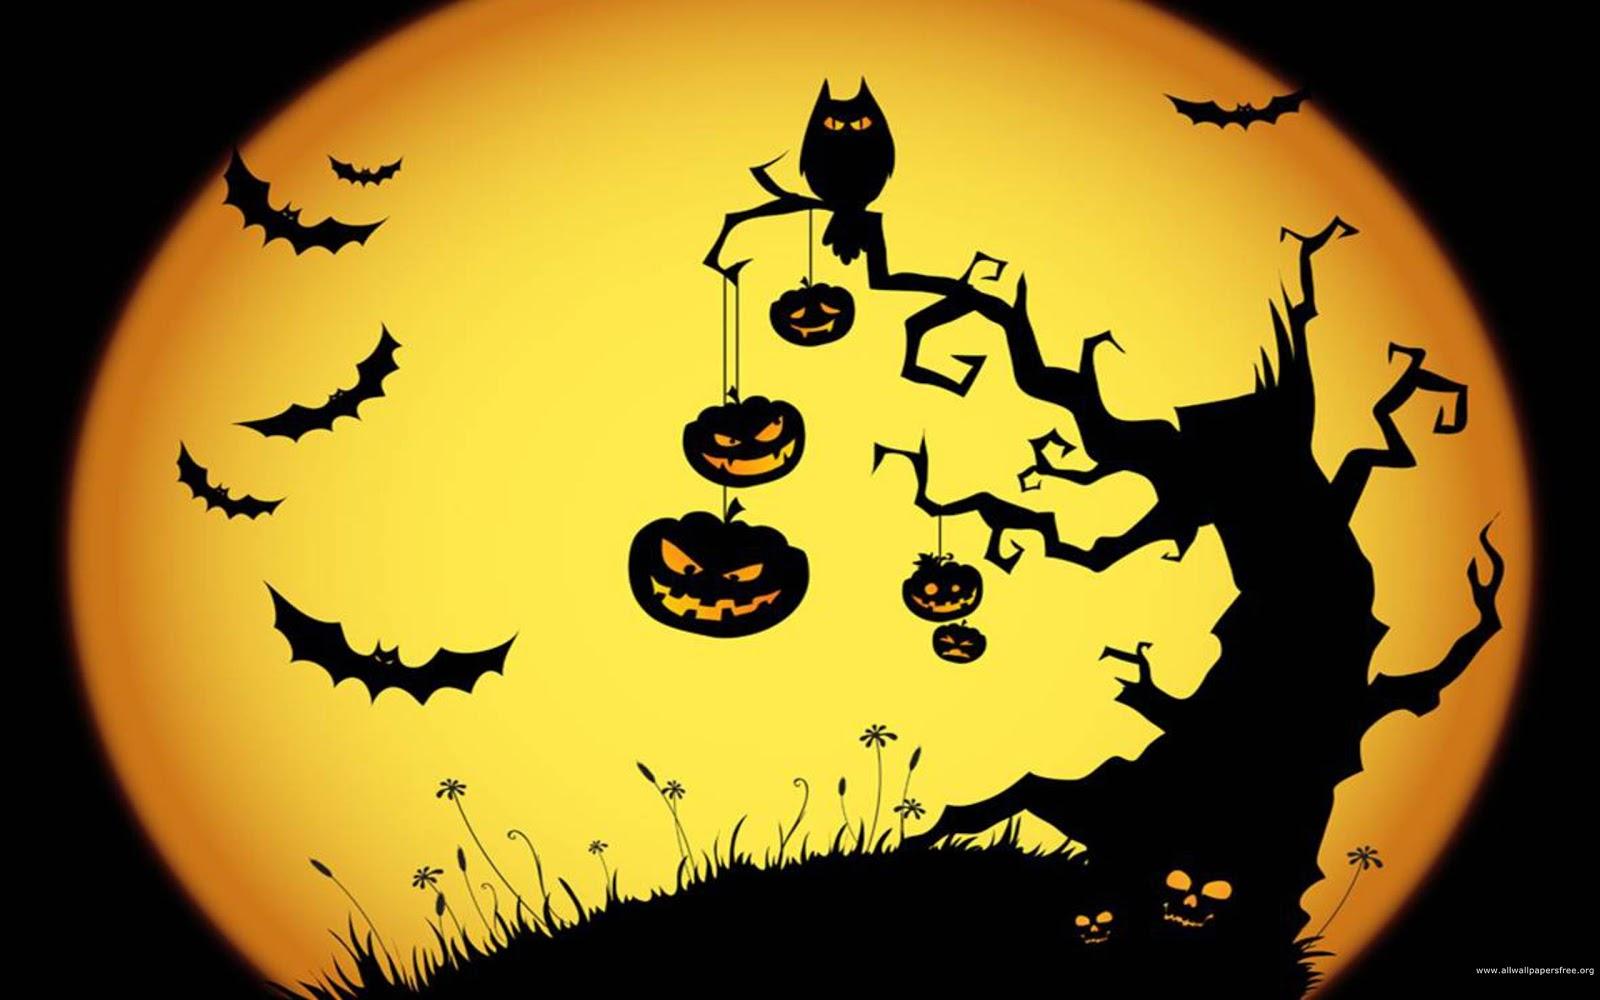 DEZKTOP: Halloween Pumpkins, Bats, Moon And Owl Wallpaper